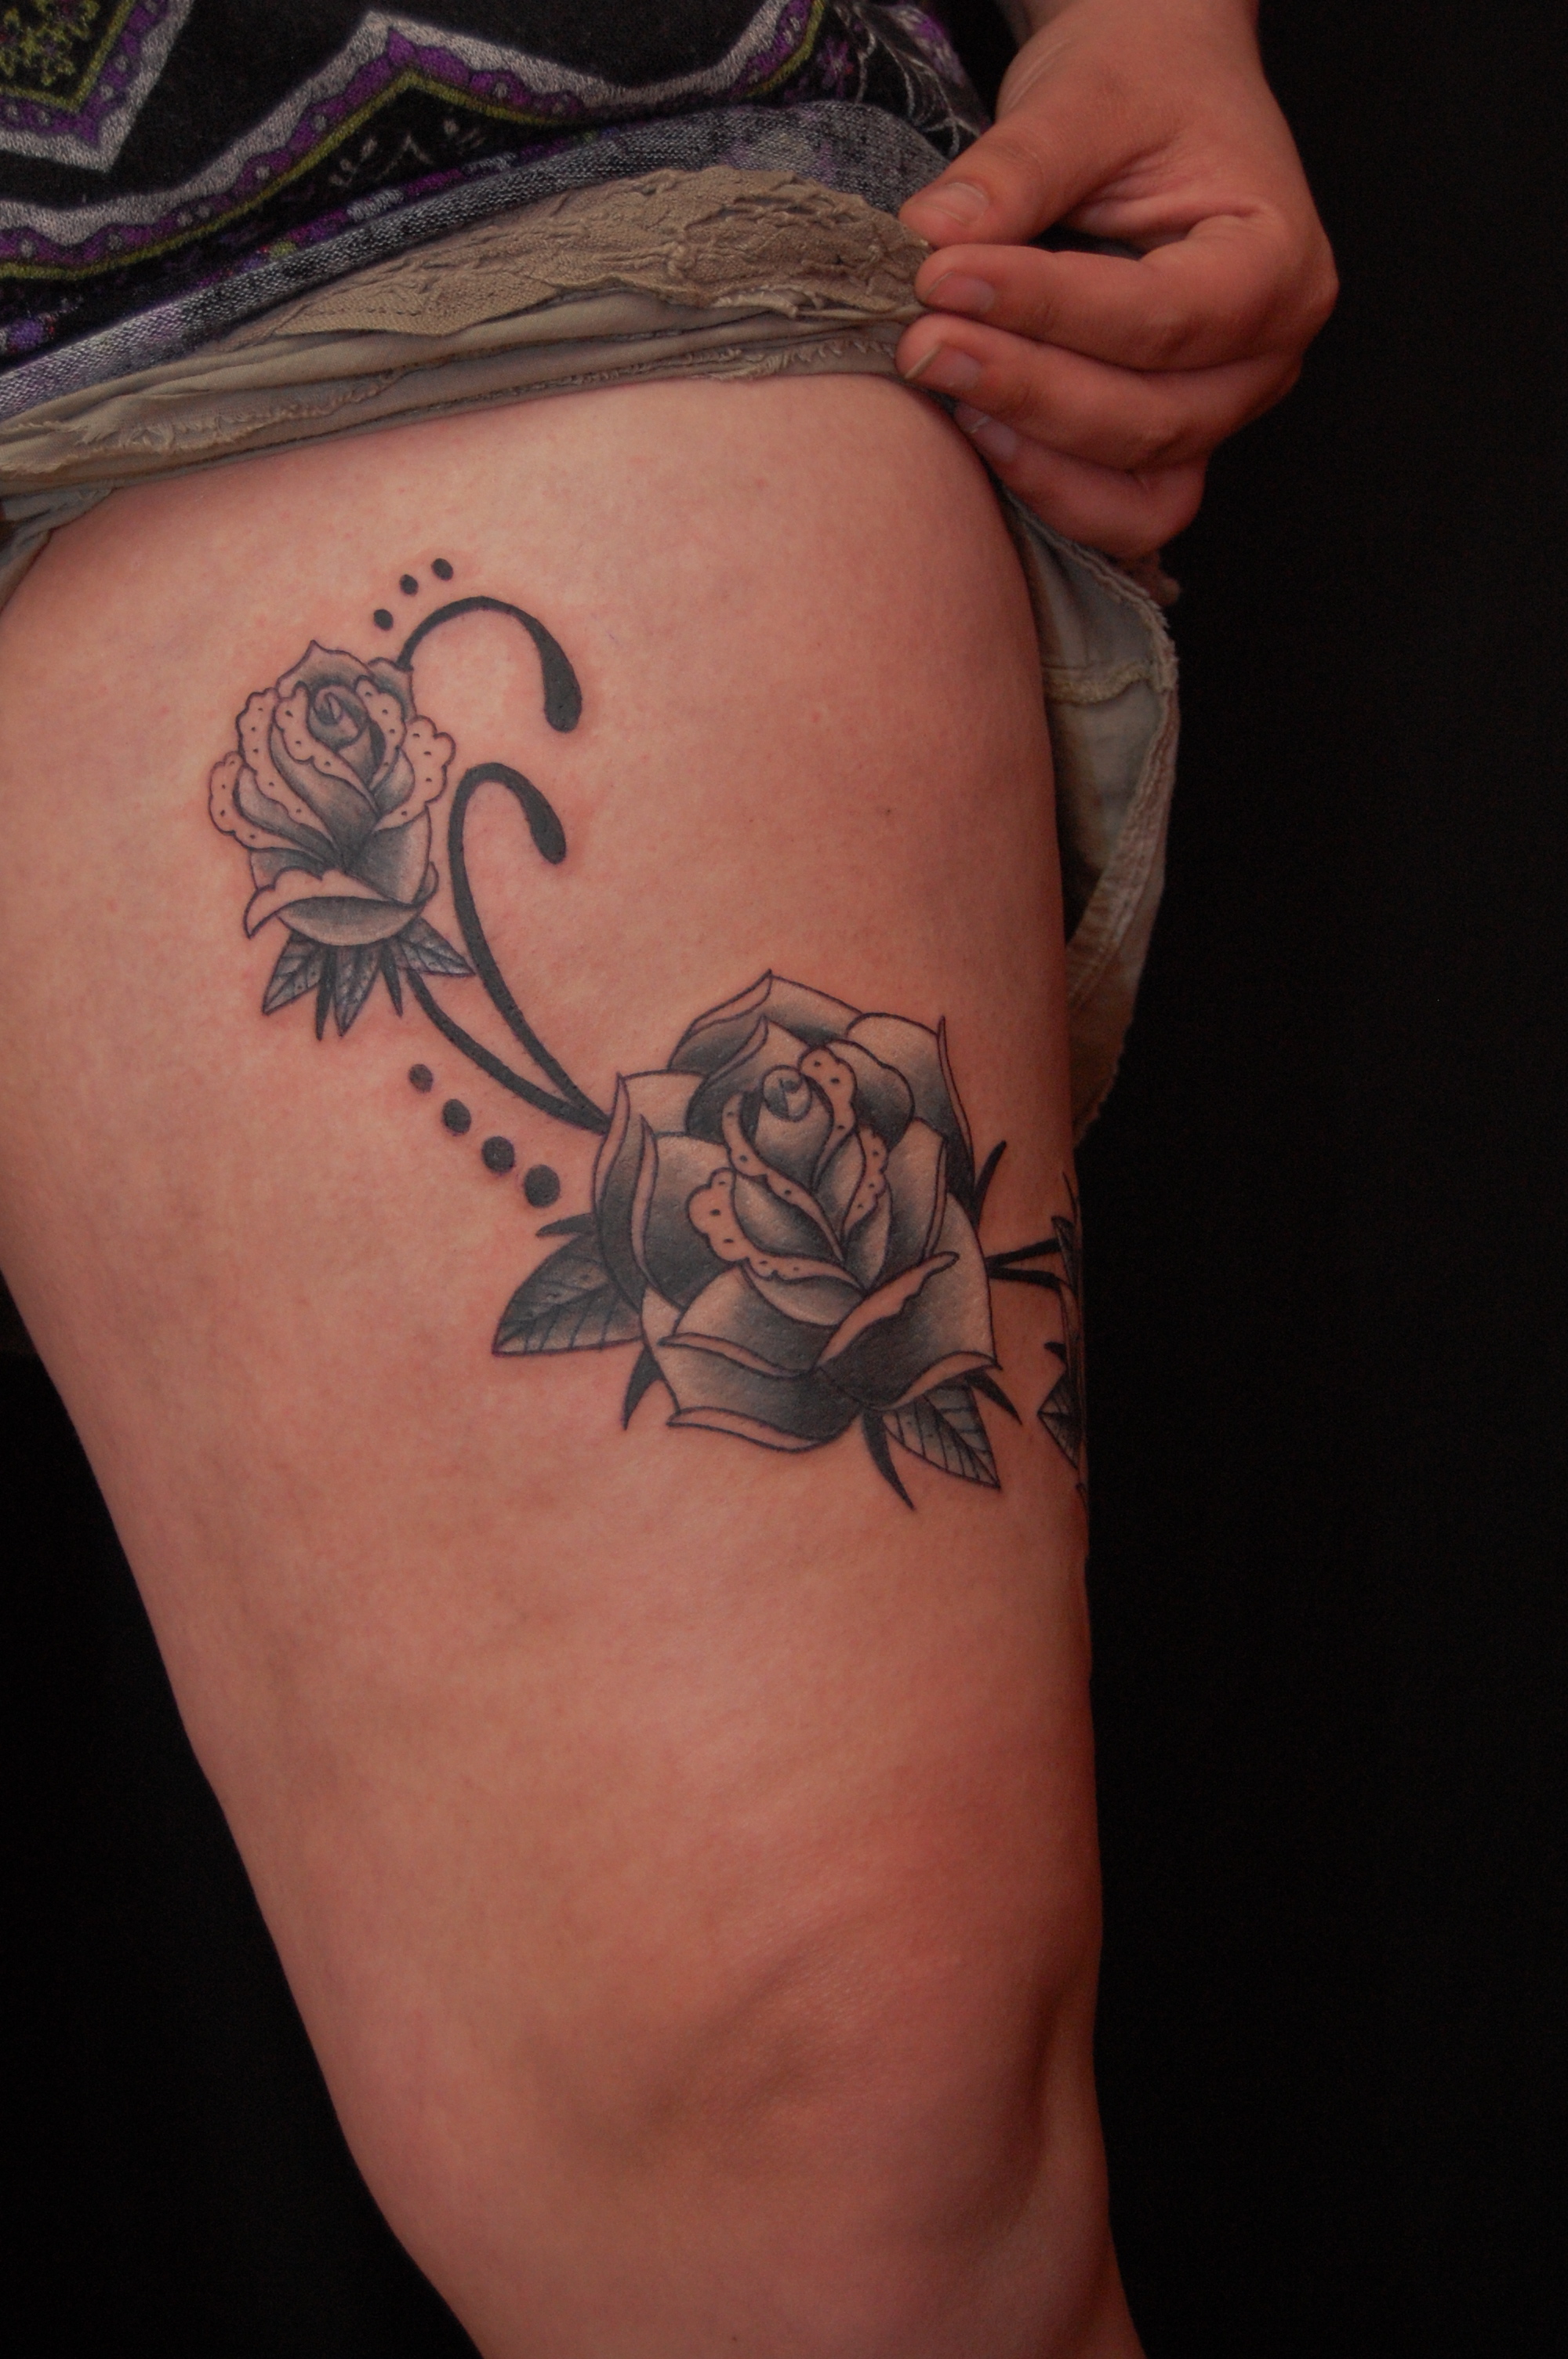 Cool flower thigh tattoos for women 2015